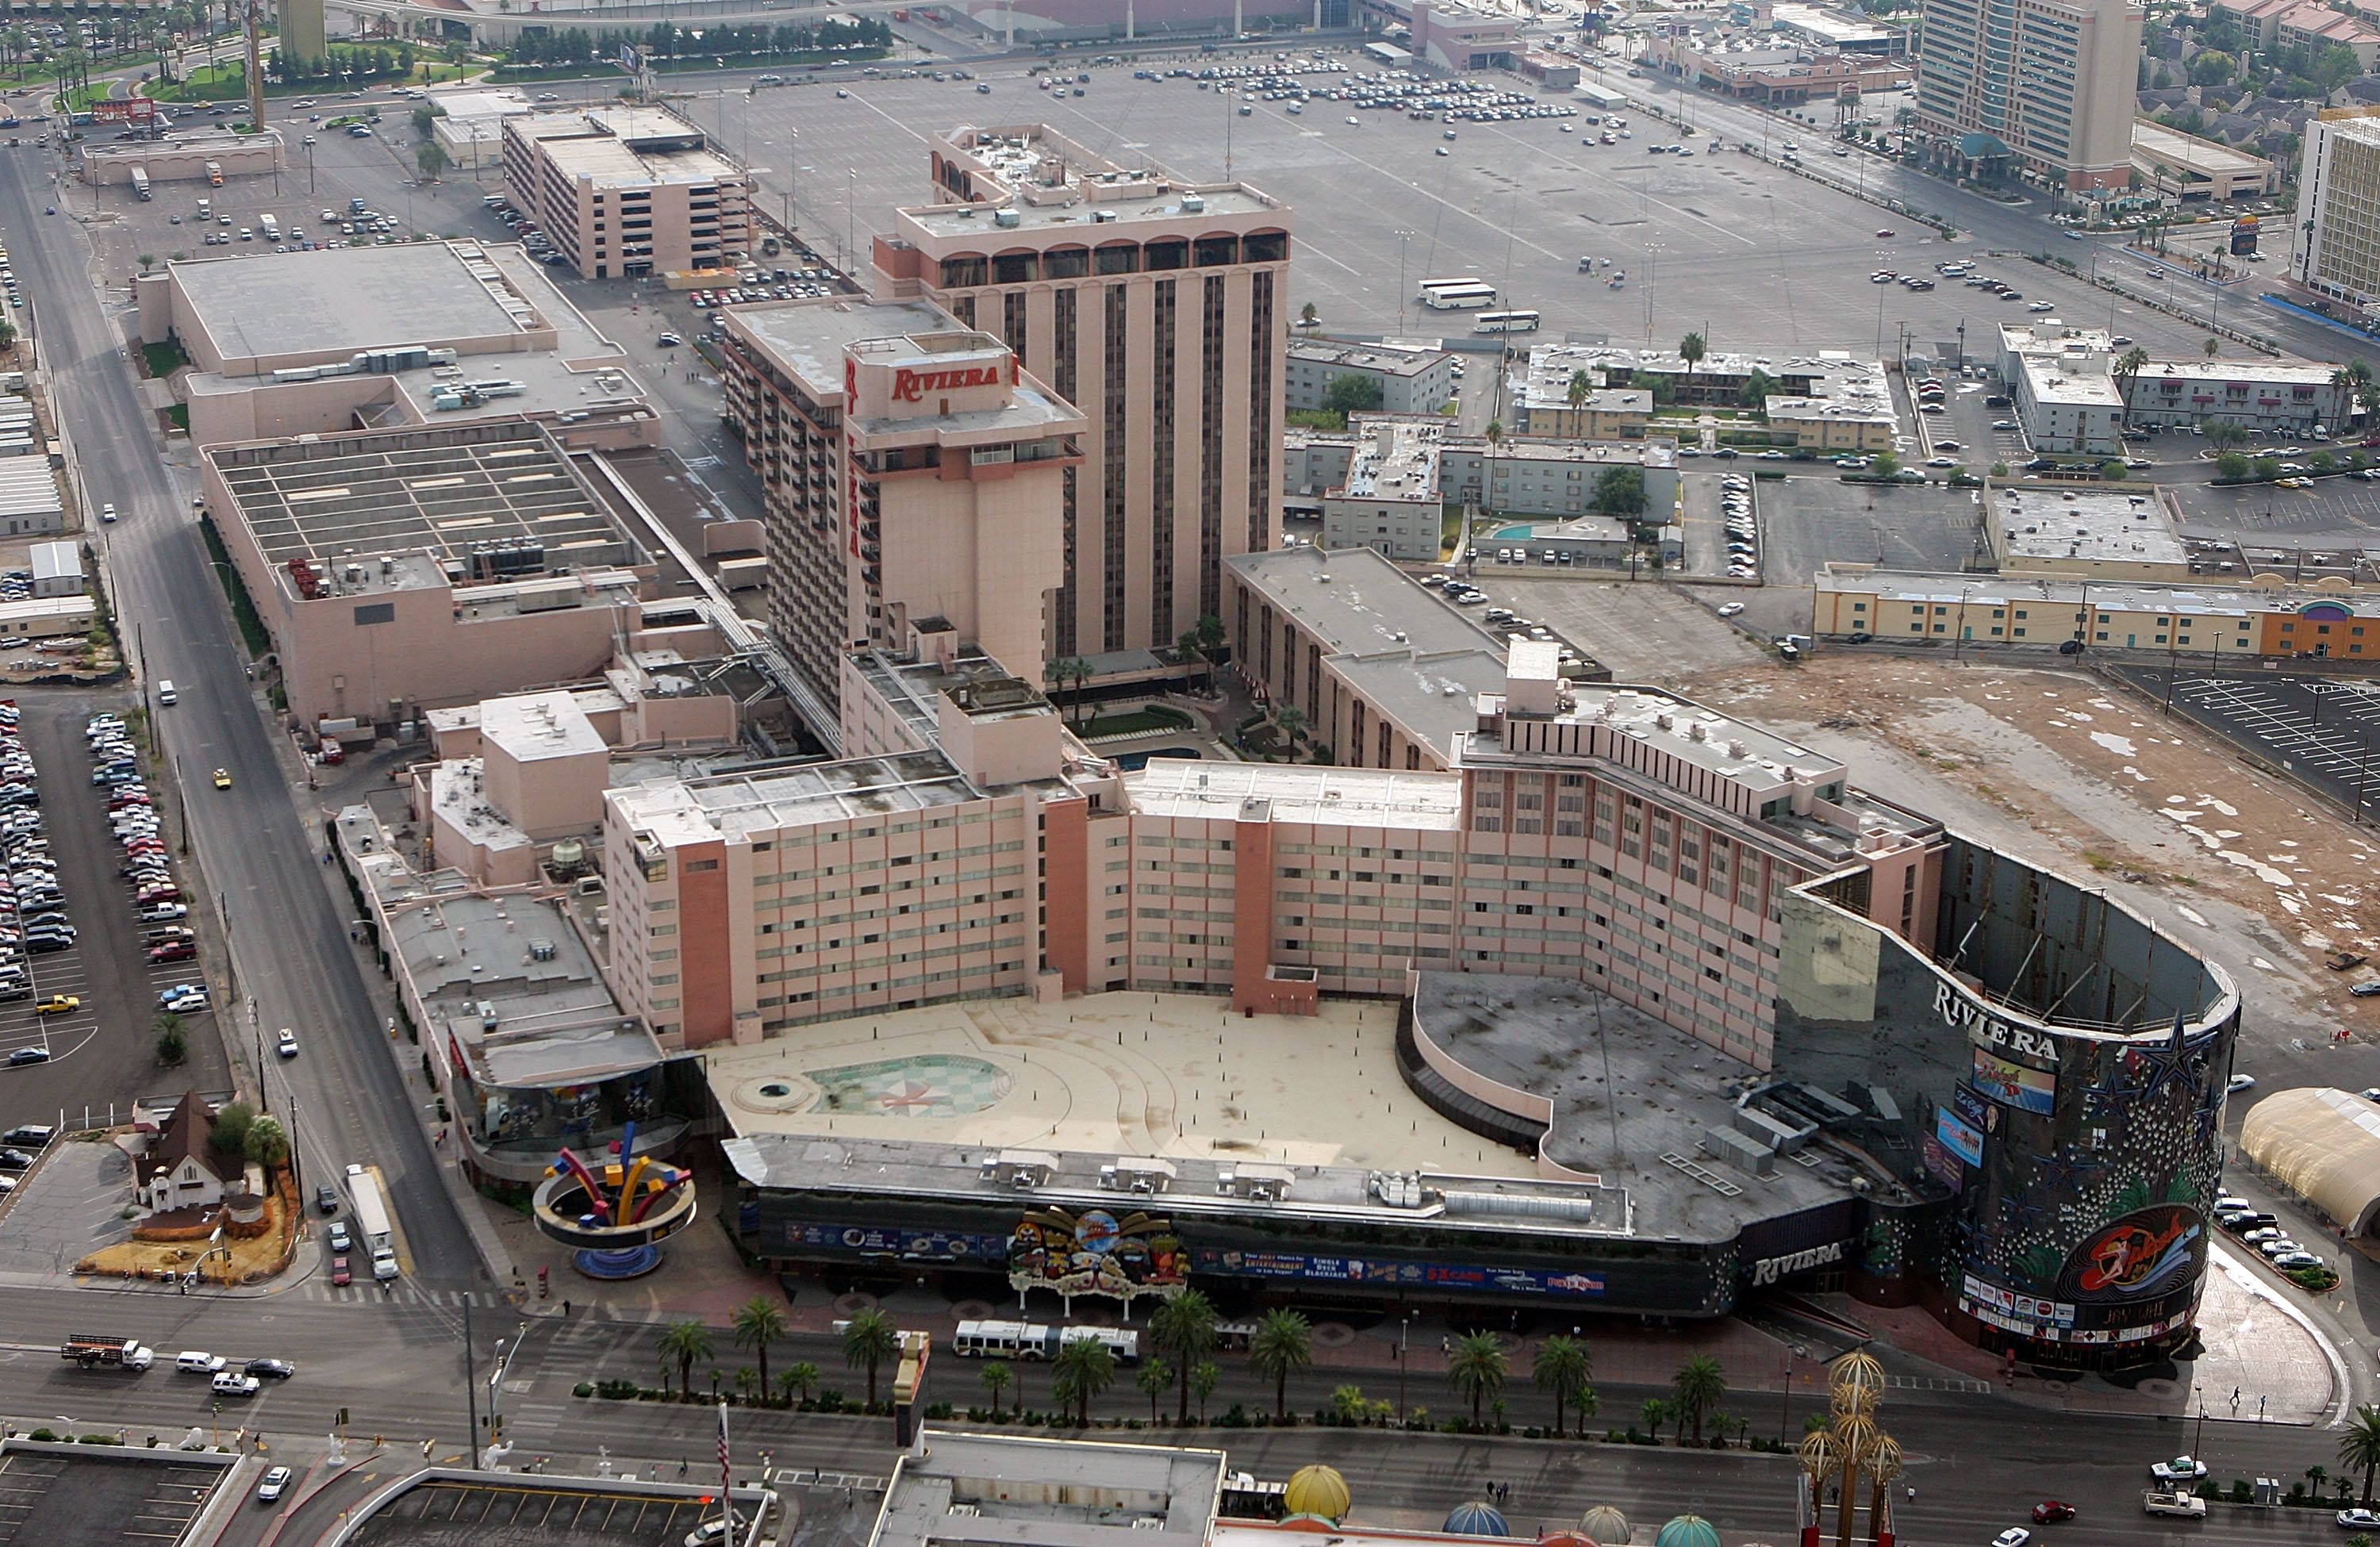 Riviera announces closure date, time on Las Vegas Strip, Casinos & Gaming